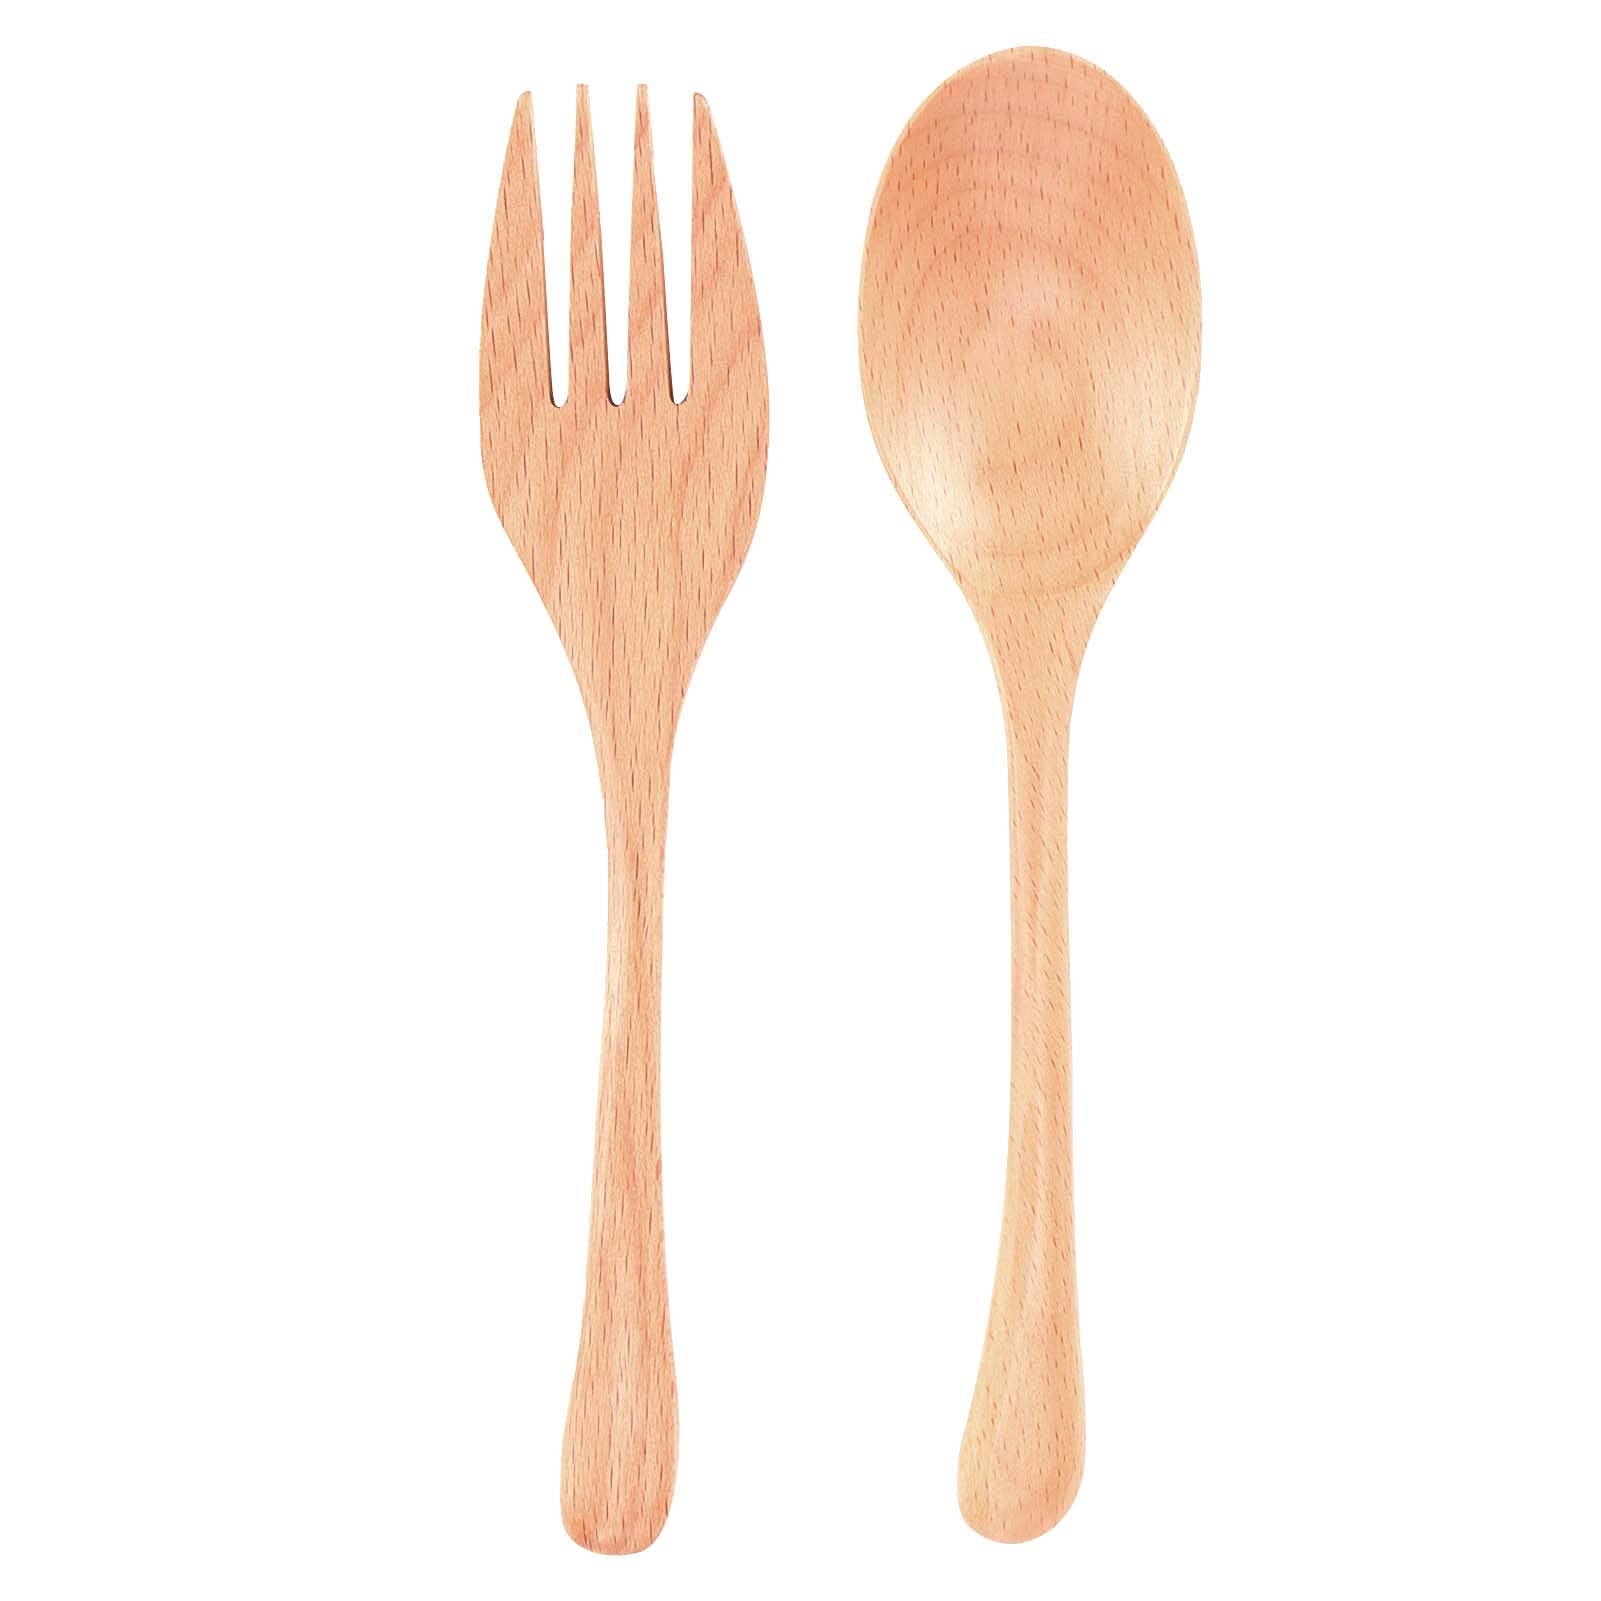 MISNODE 2Pcs Wooden Spoon Set Spoon Fork Set for Eating Mixing Stirring, Sauce Spoon Japanese Style Tableware Kitchen Utensil for Home Kitchen Restaurant